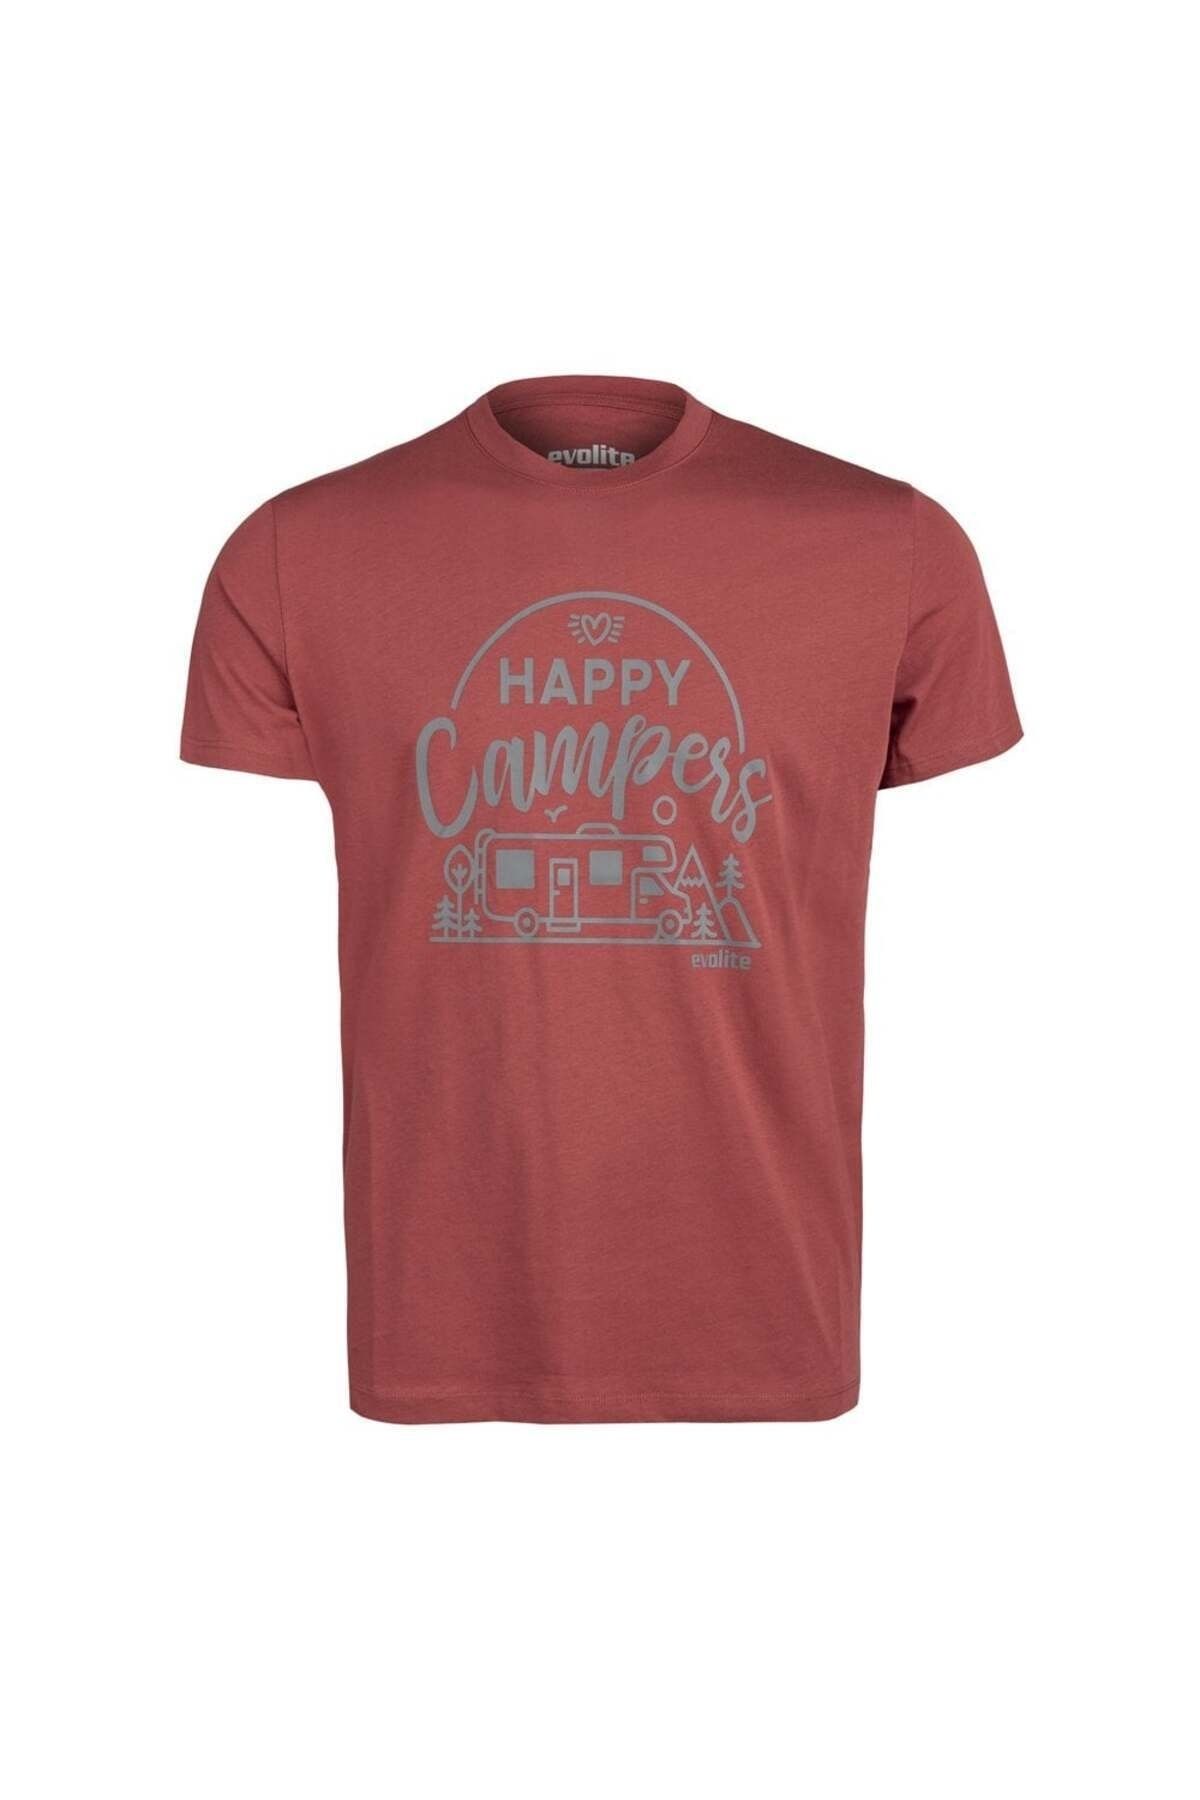 Evolite Happy Campers T-Shirt [Kiremit]